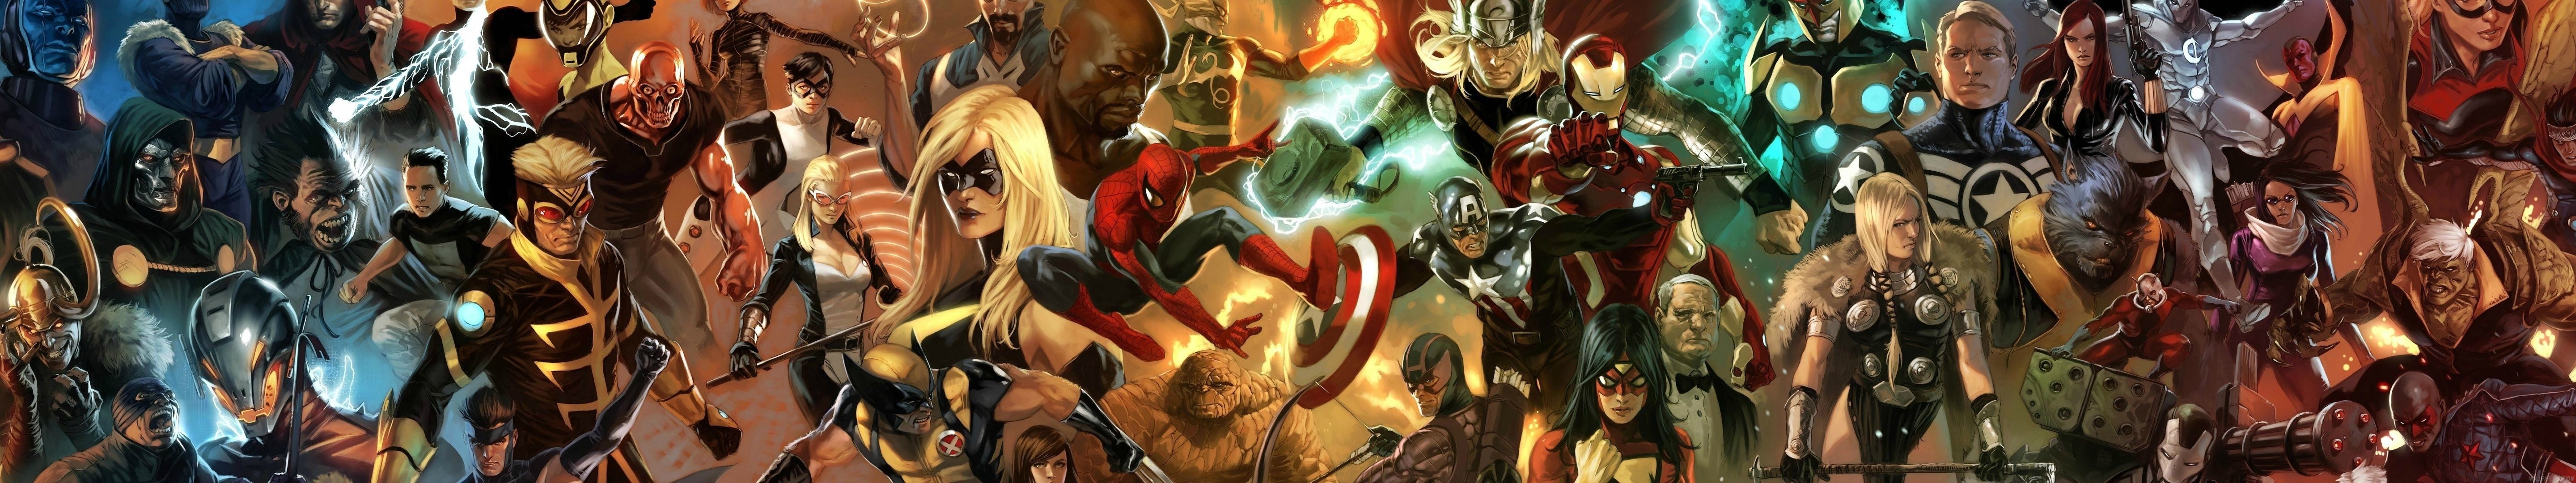 Iron Man Black Widow Captain America Thor Spider Man Wolverine Dr Doom Comics The Vision Marko Djurd 5760x1080